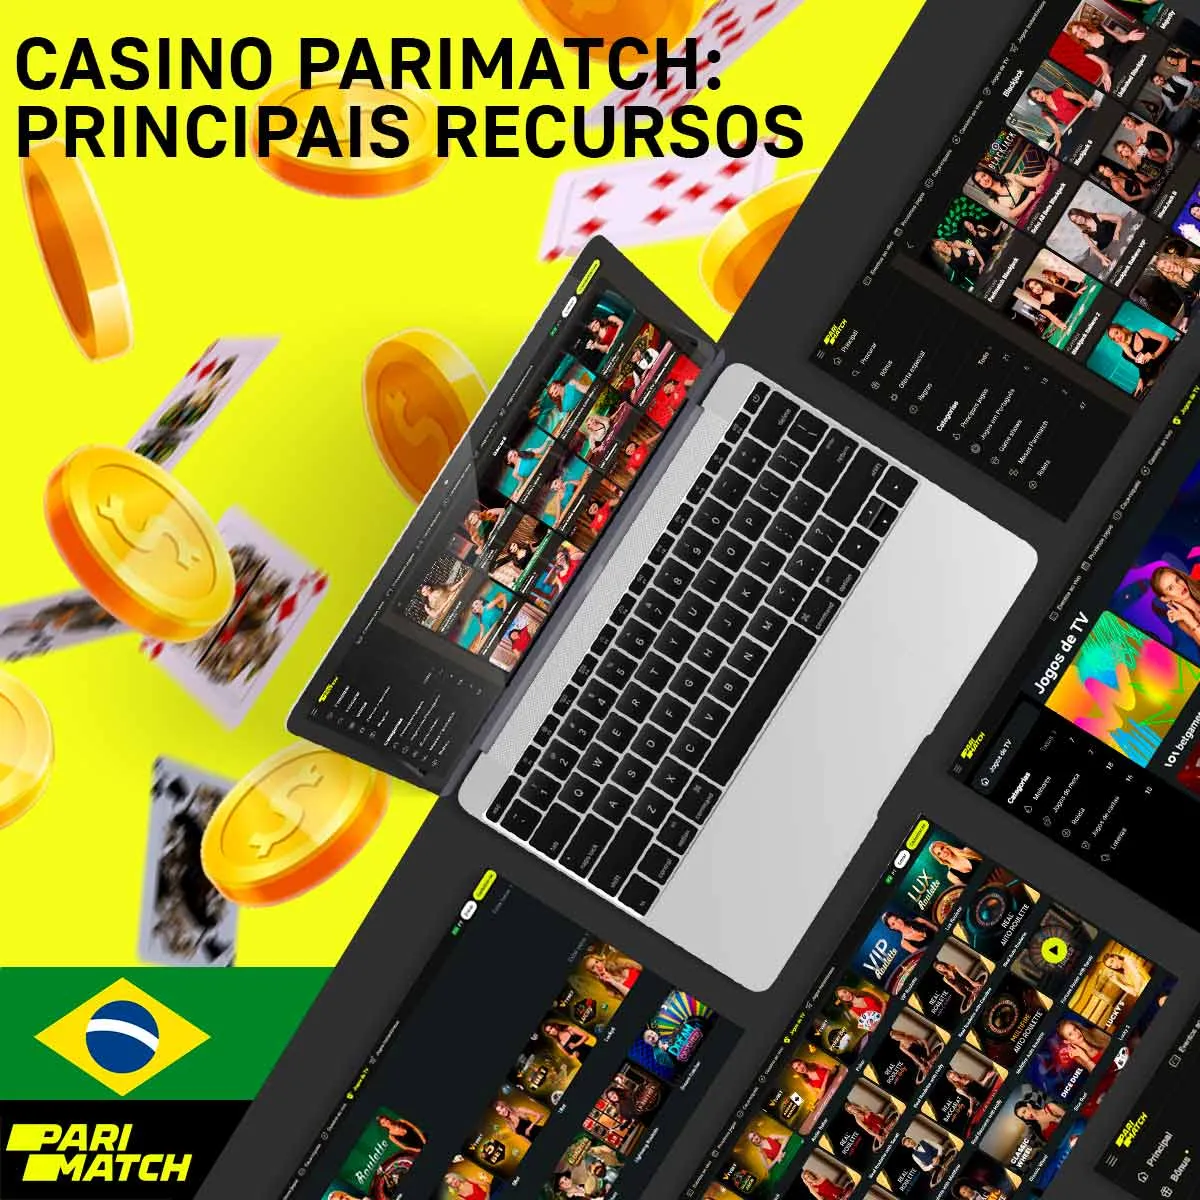 As principais características do cassino da casa de apostas Parimatch no Brasil